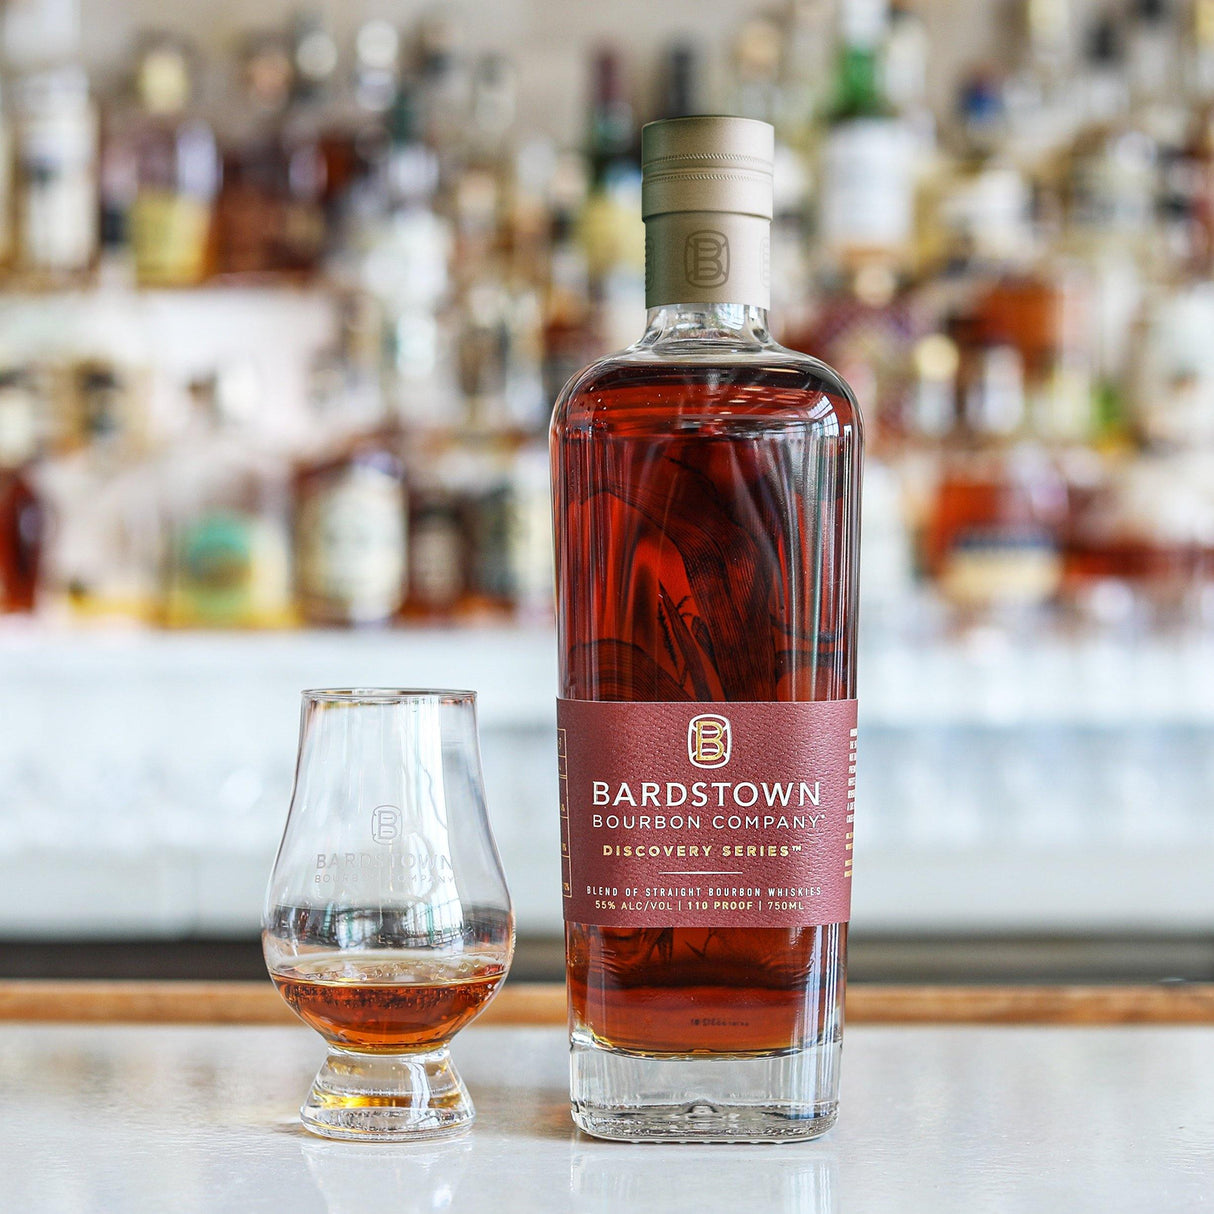 Bardstown Bourbon Company "Discovery Series #4" Kentucky Straight Bourbon Whiskey - De Wine Spot | DWS - Drams/Whiskey, Wines, Sake